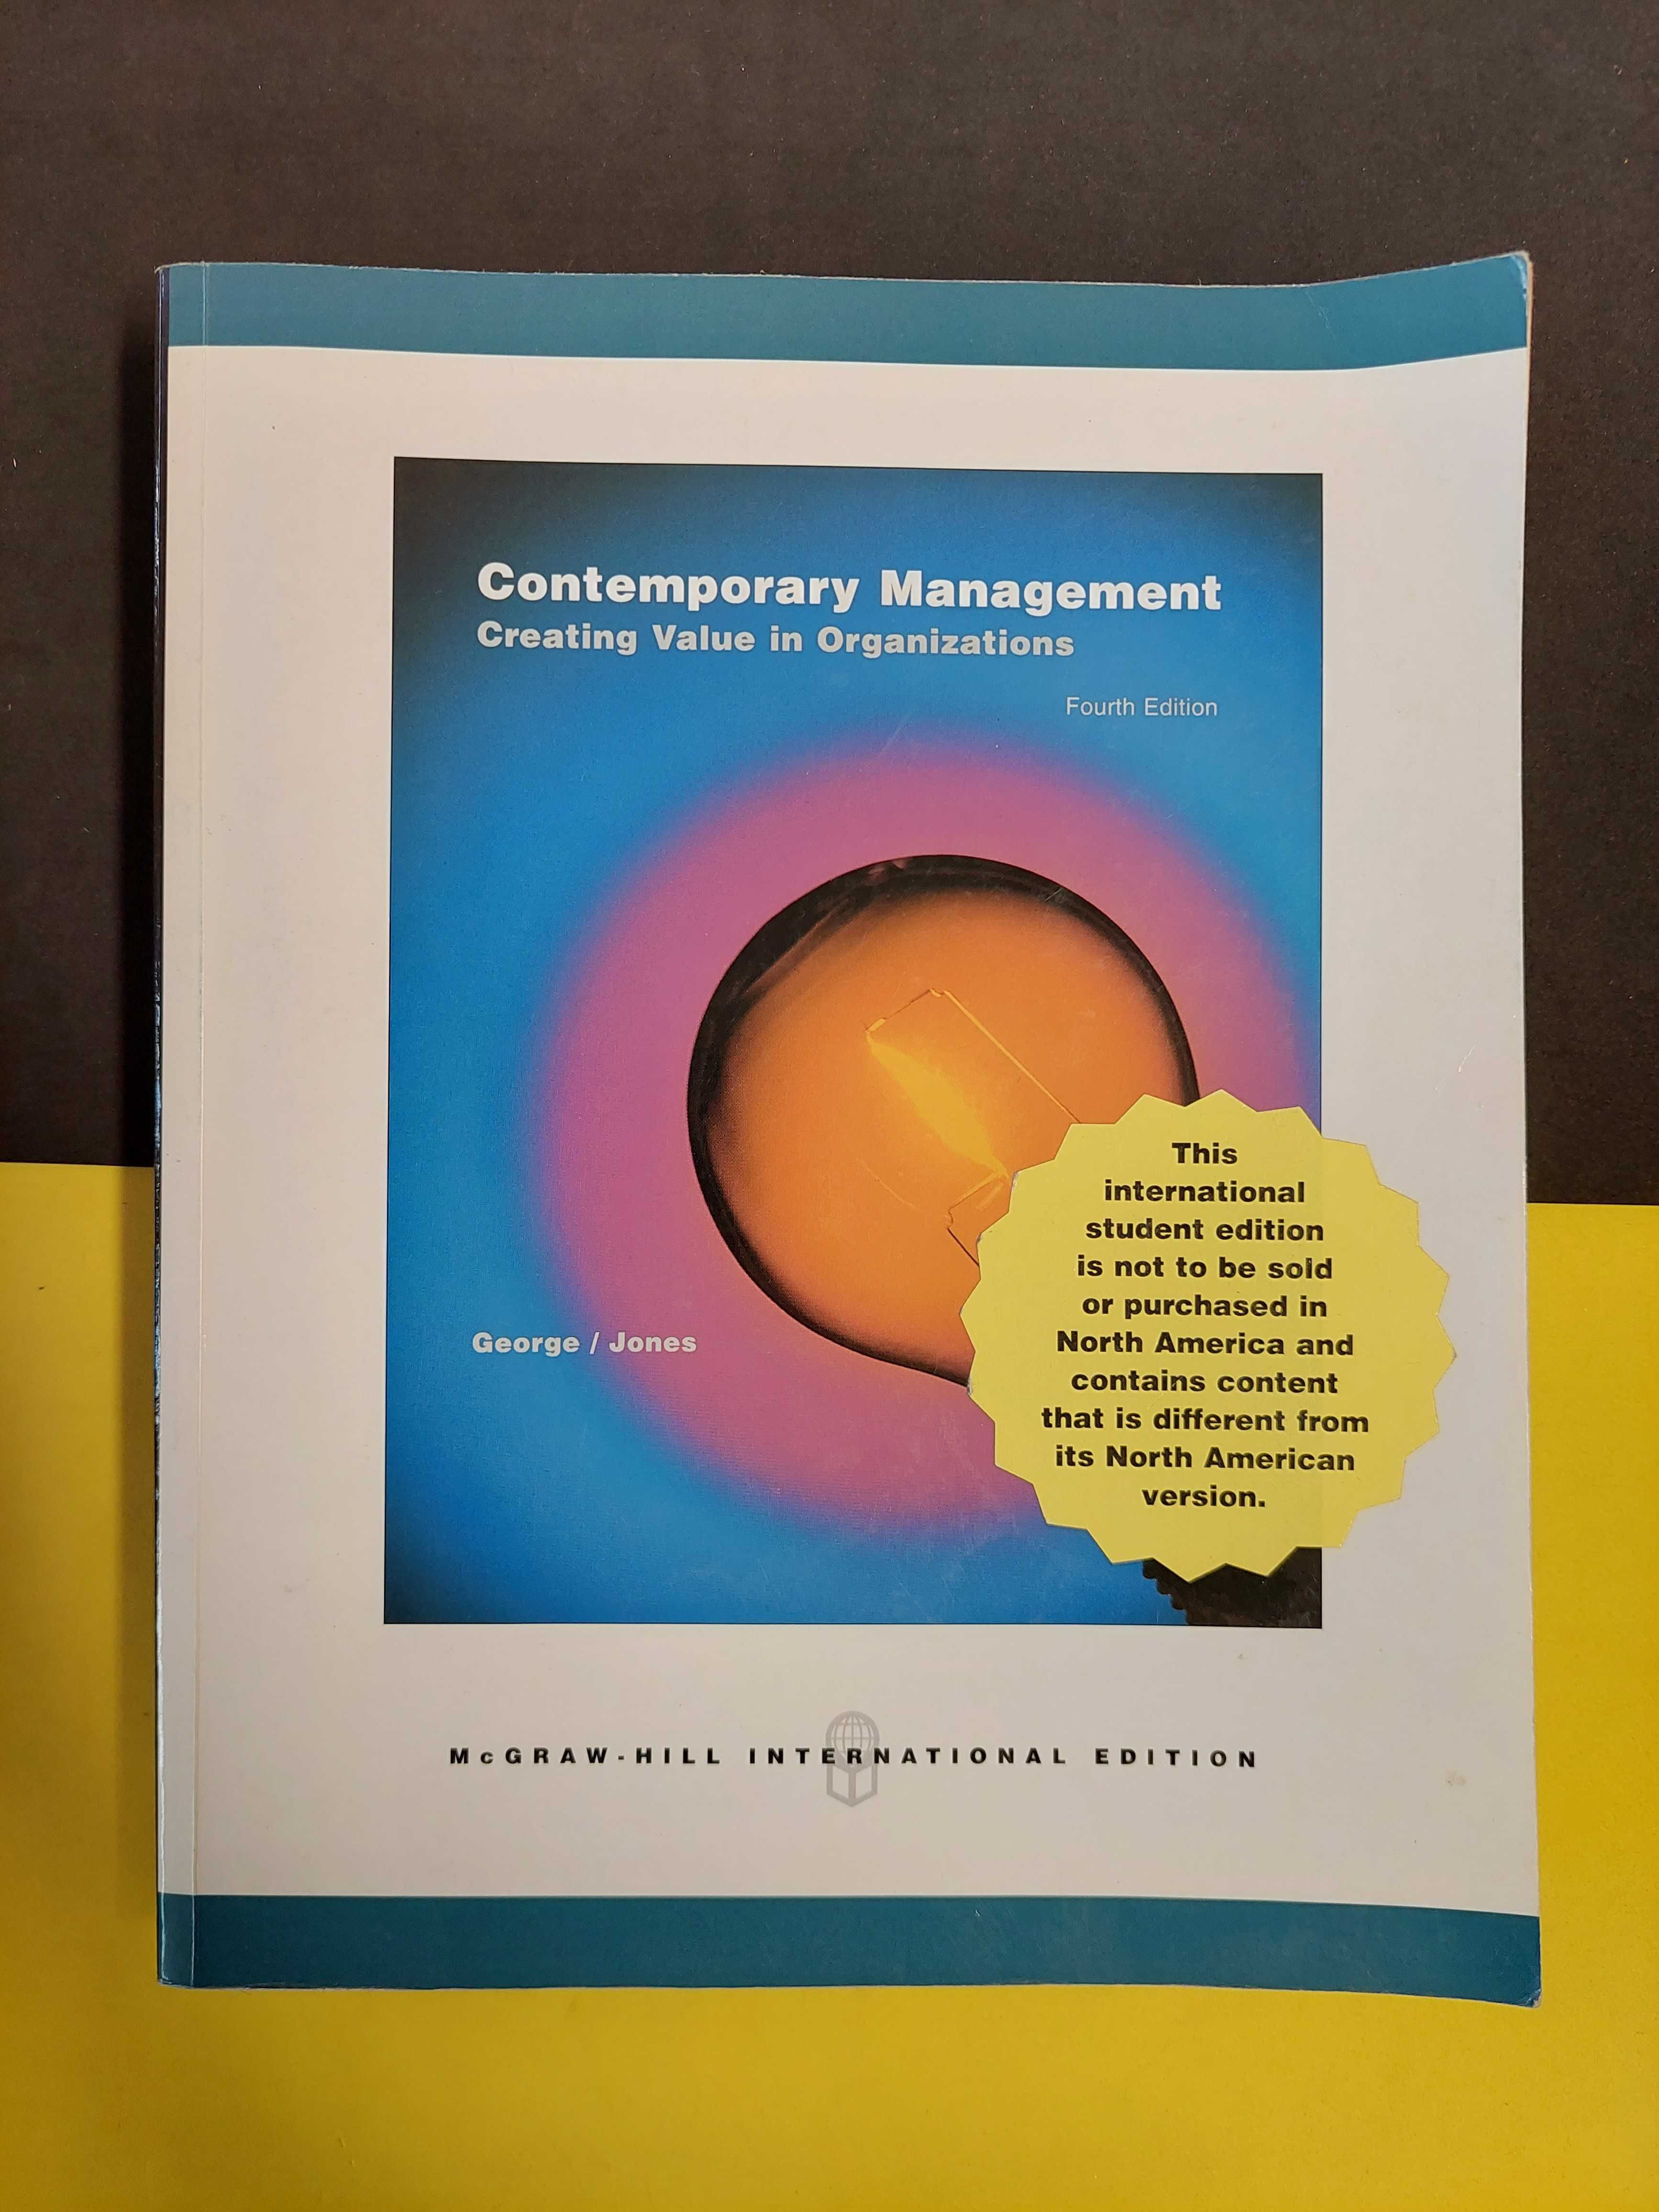 George/Jones - Contemporary Management